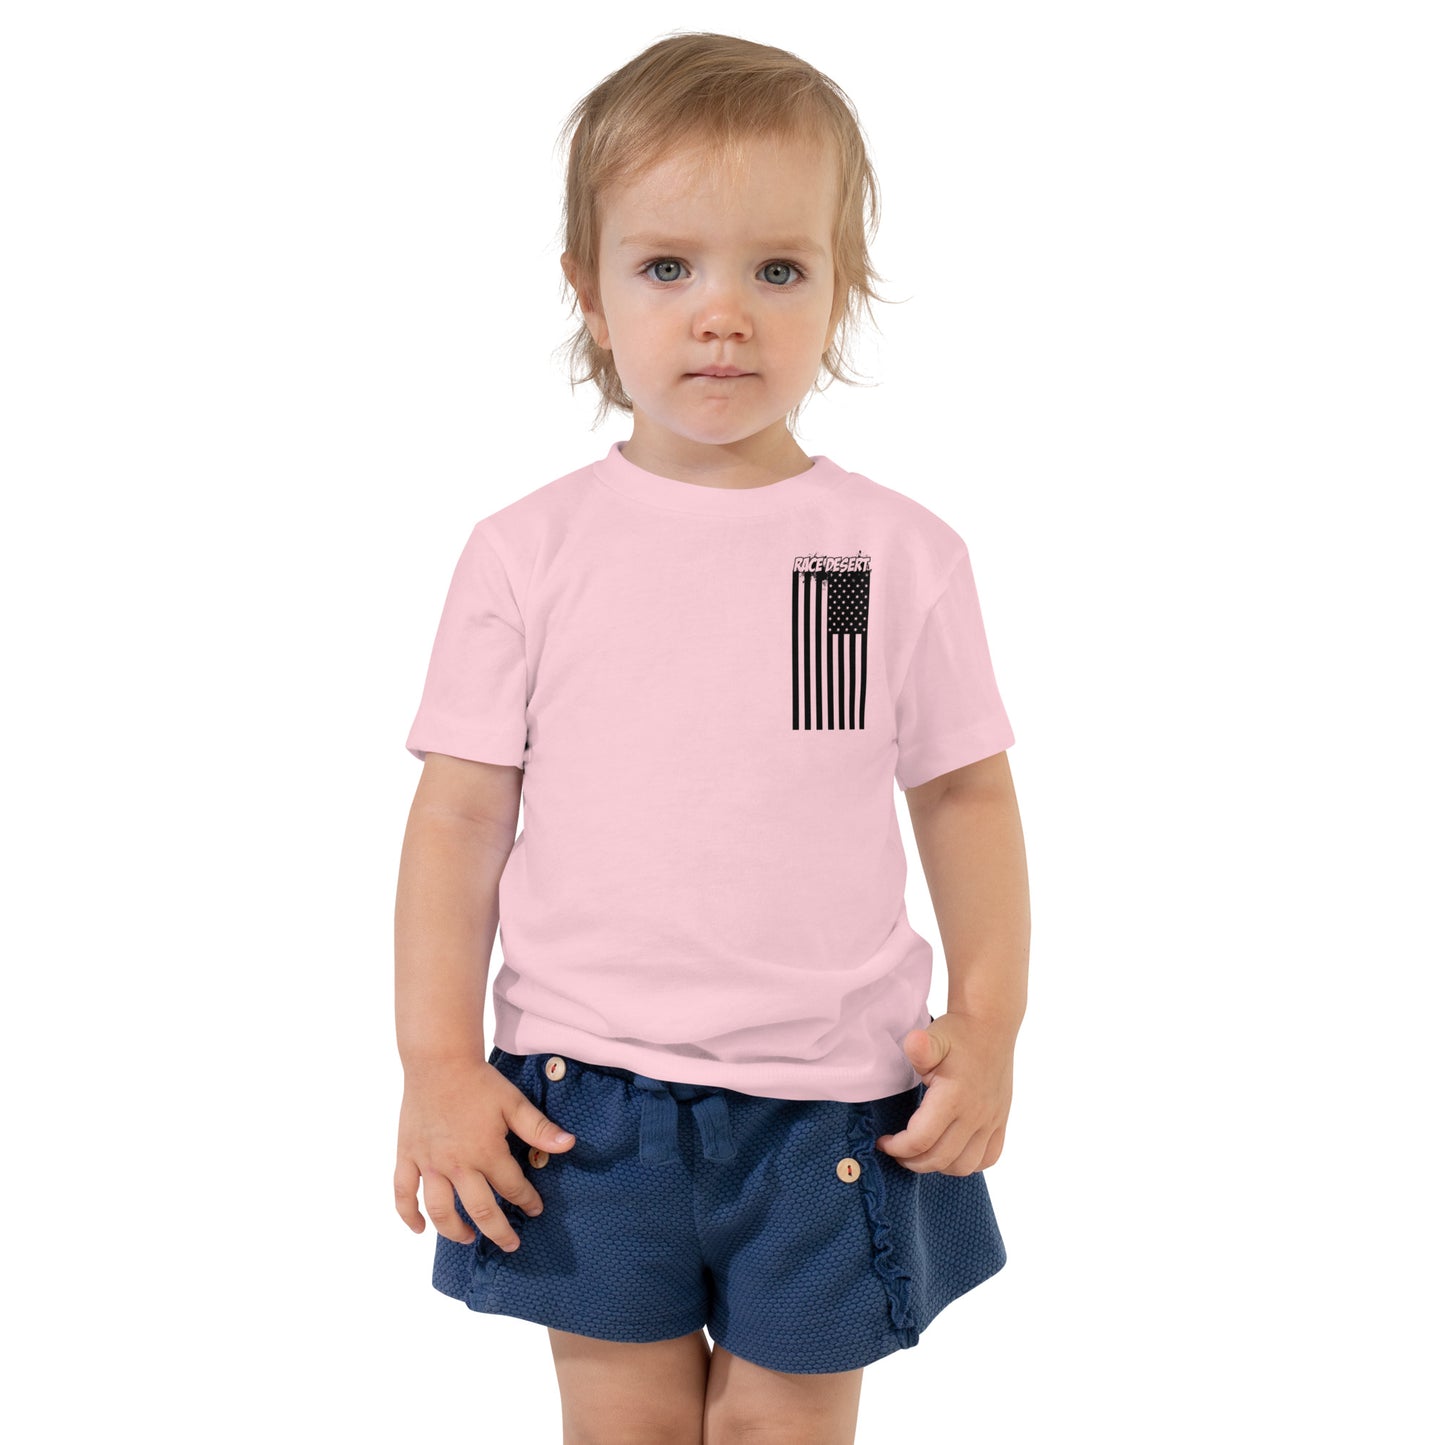 Toddler Desert Nation T-Shirt - Light Pink